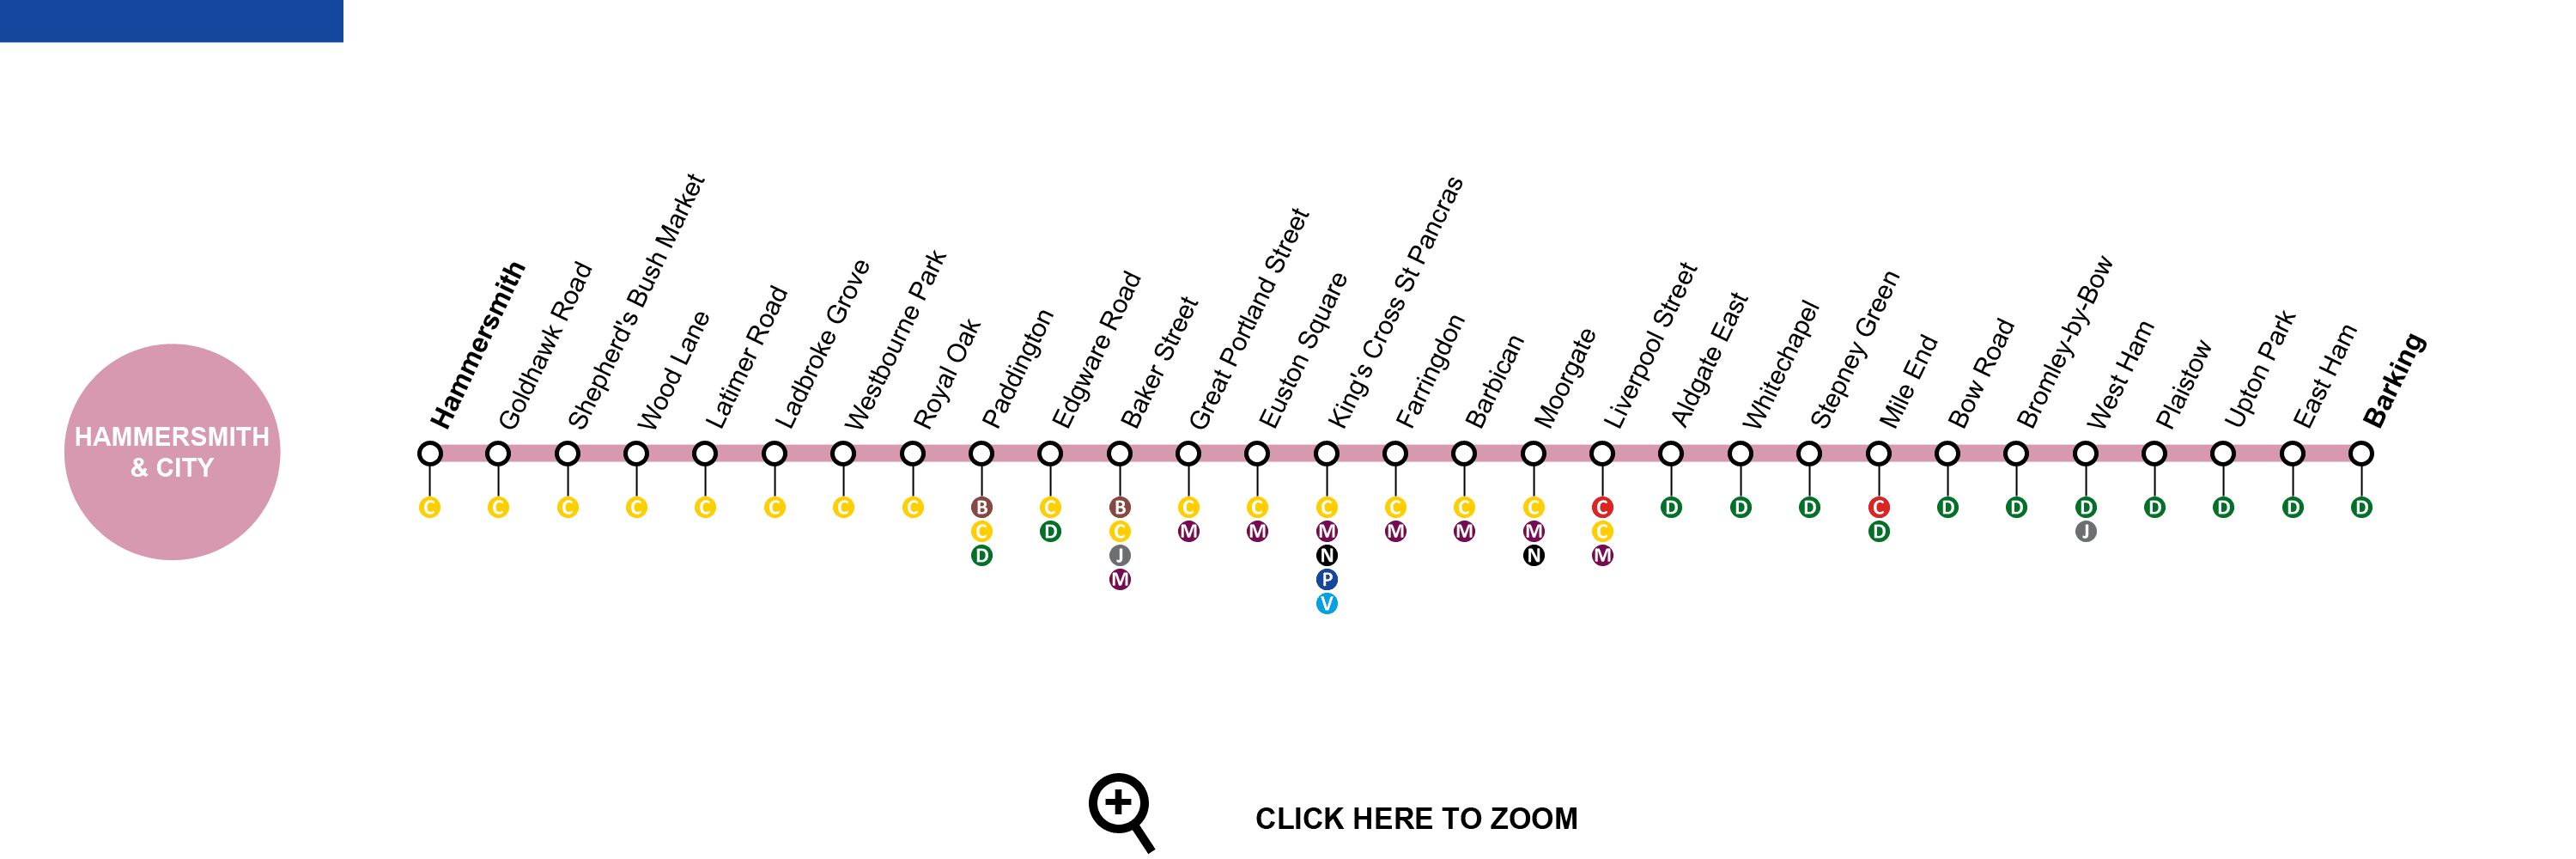 Hammersmith & City Line Map